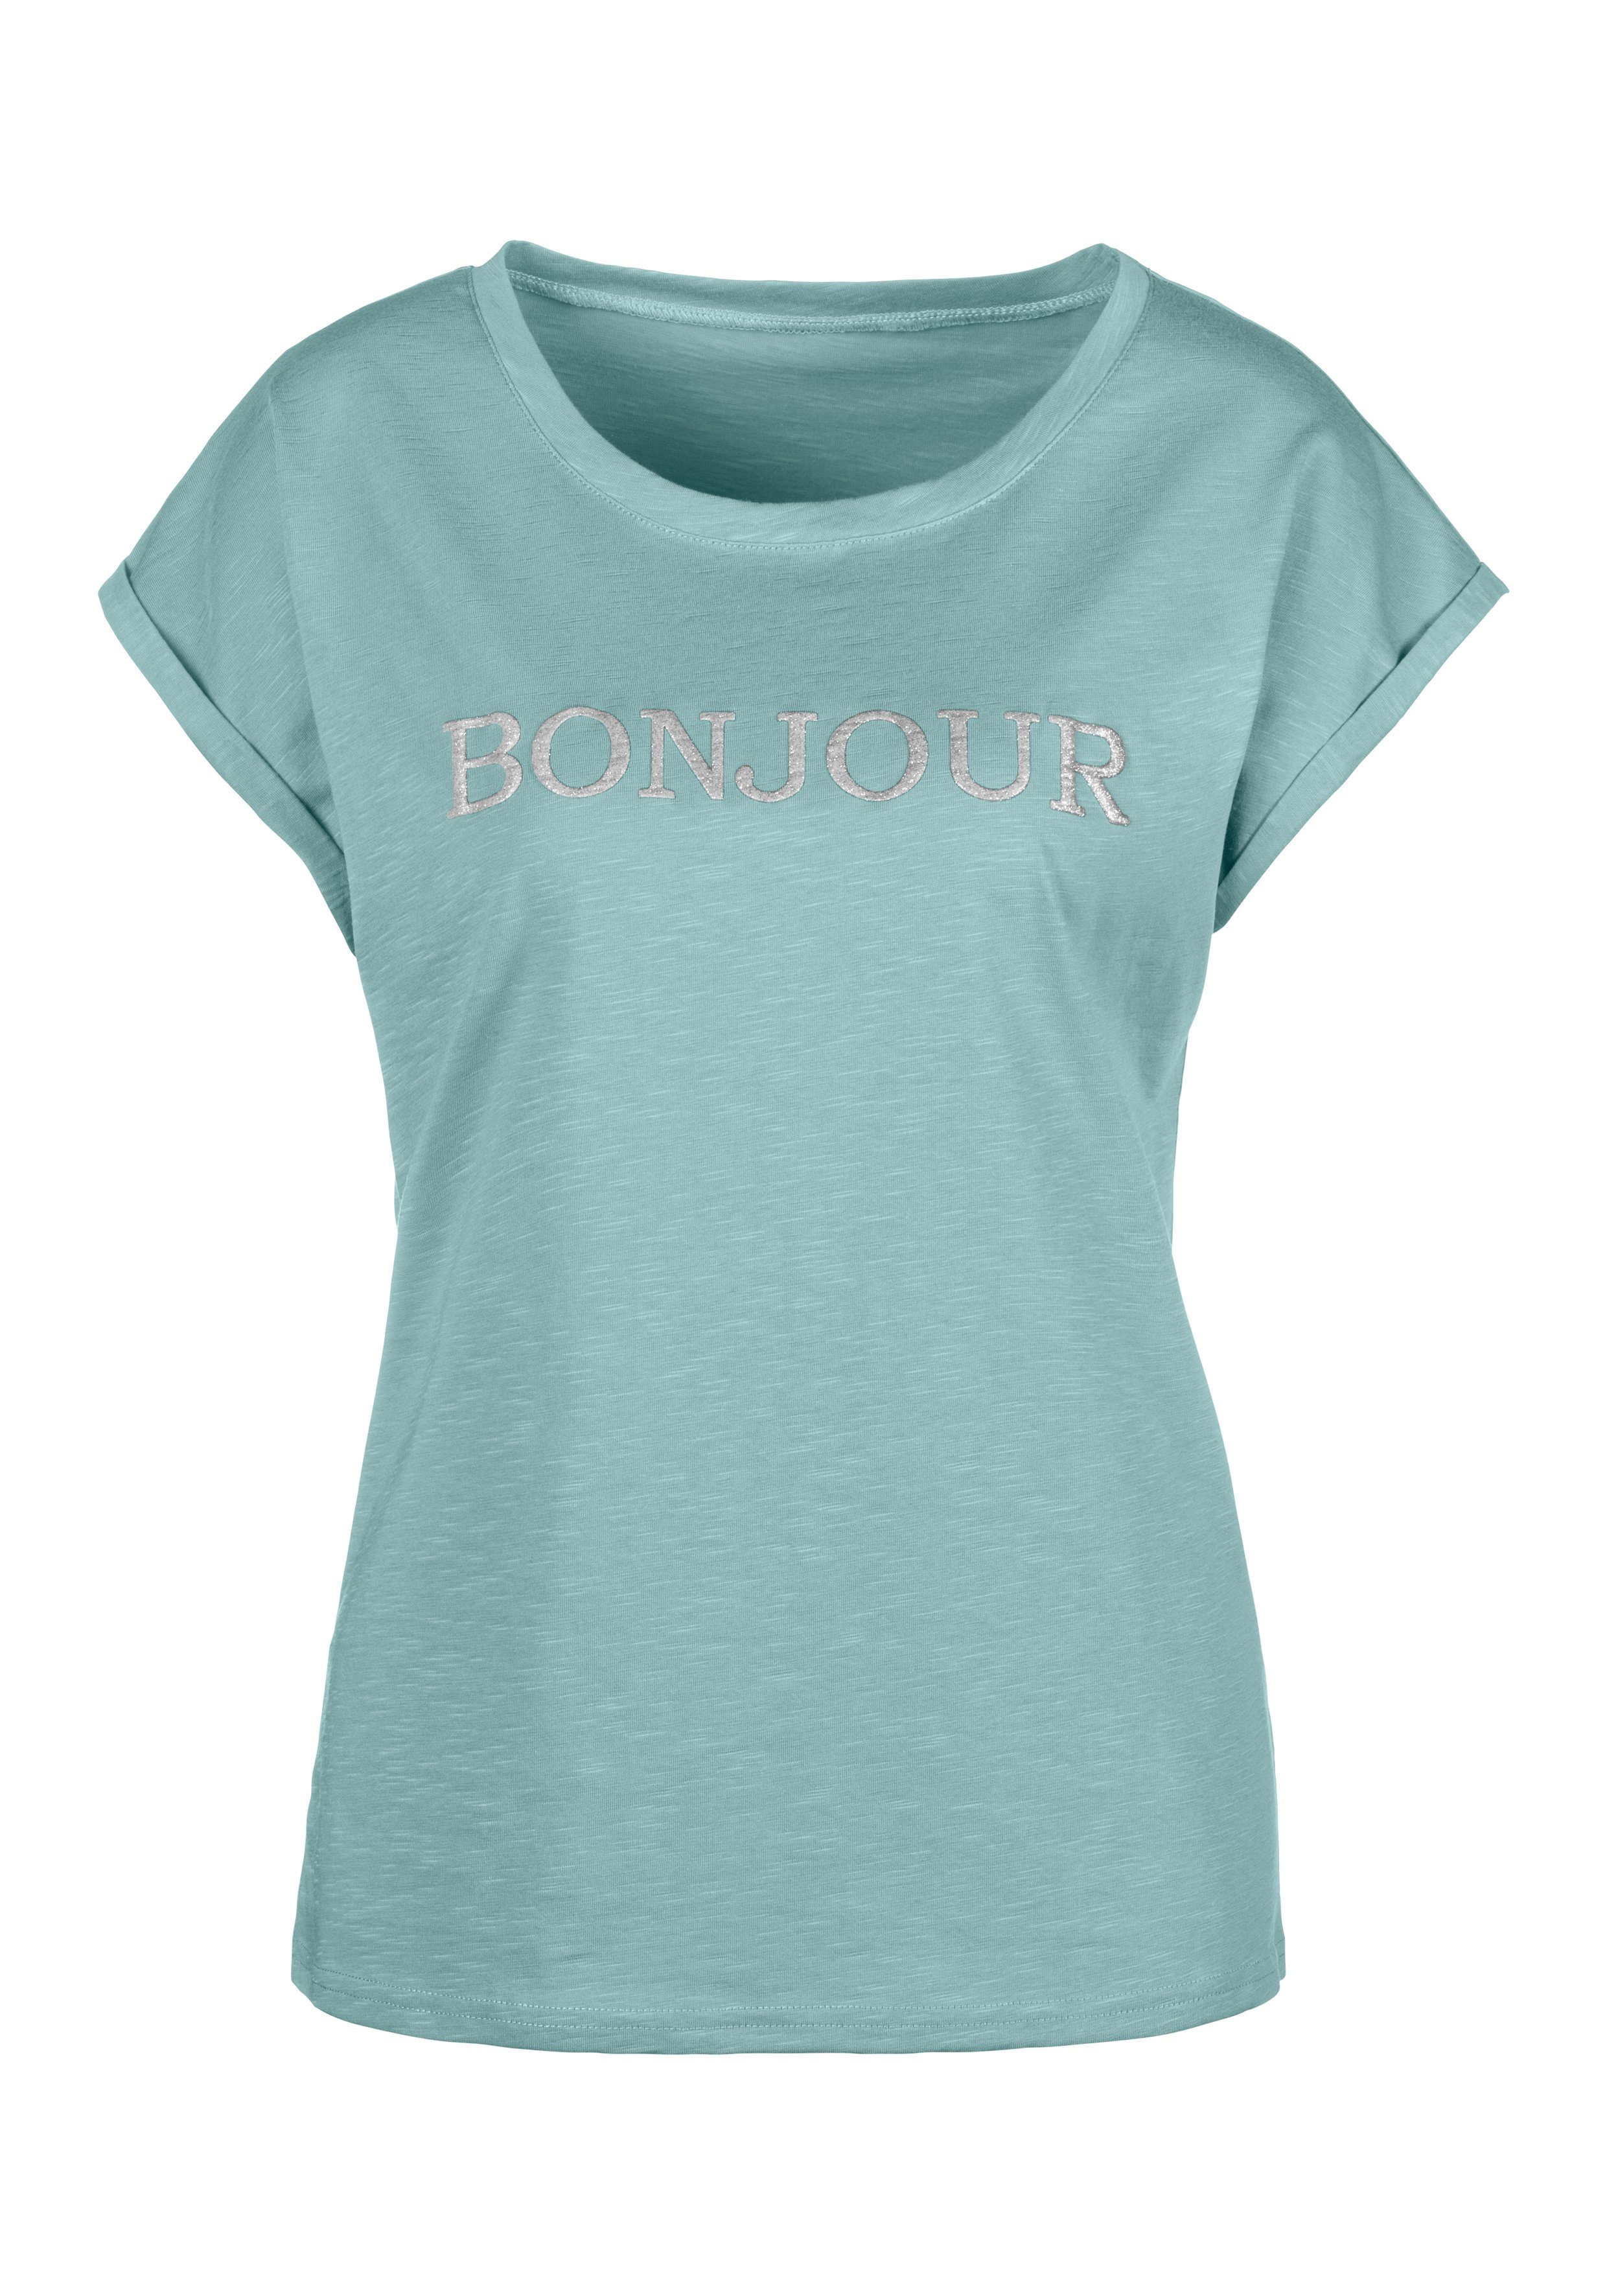 T-Shirt Vivance modischem Frontdruck "Bonjour" mint mit